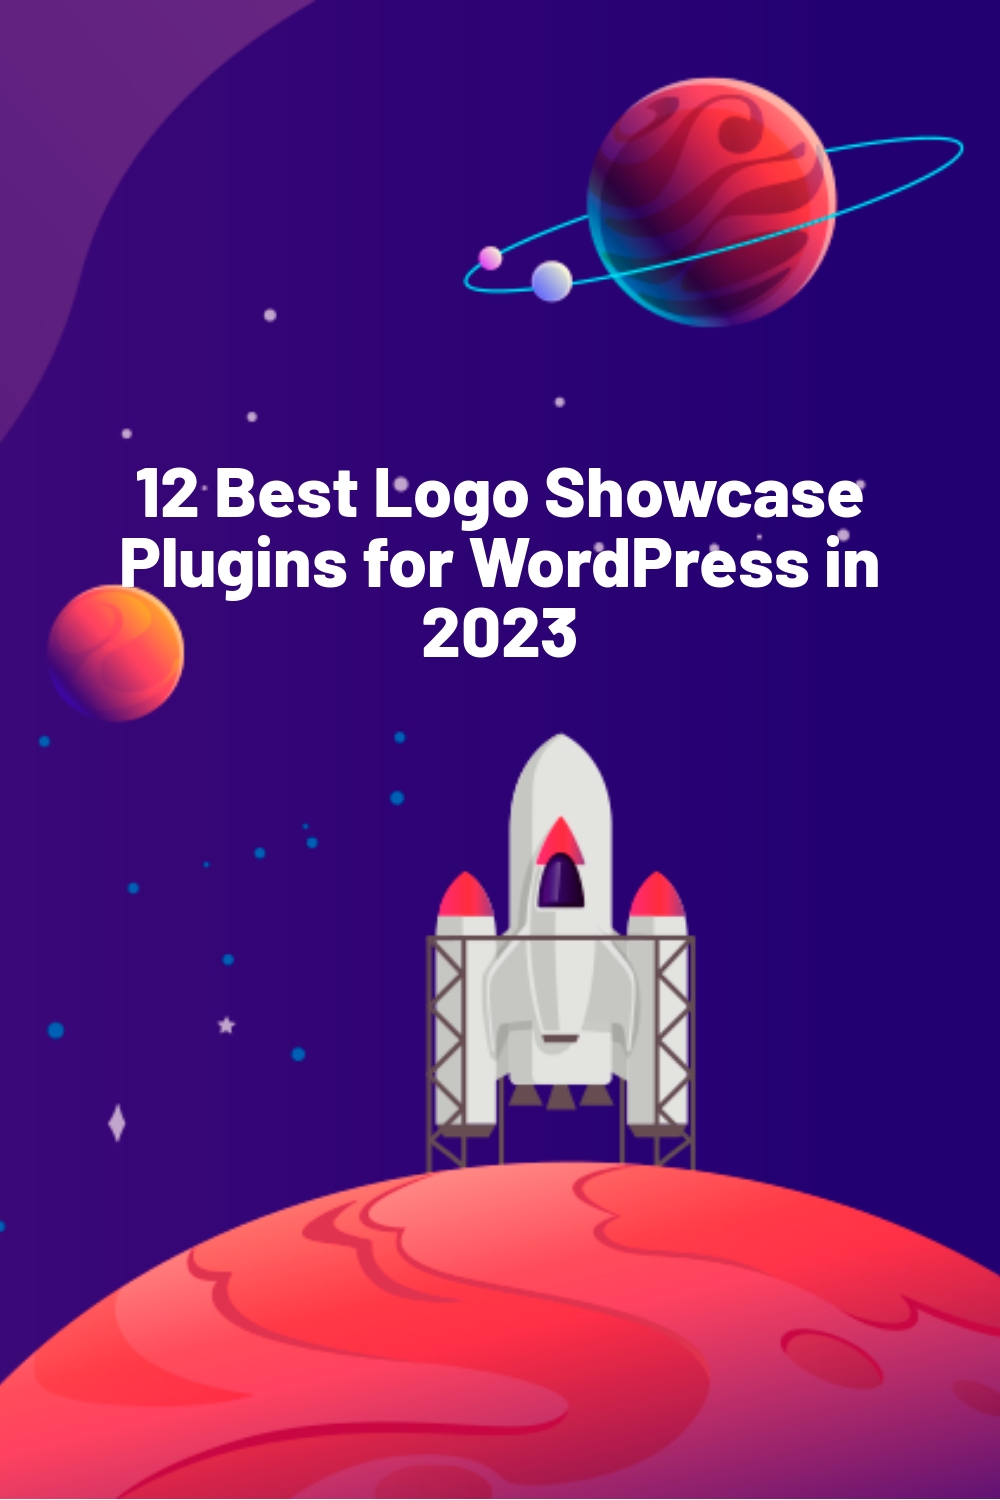 12 Best Logo Showcase Plugins for WordPress in 2023